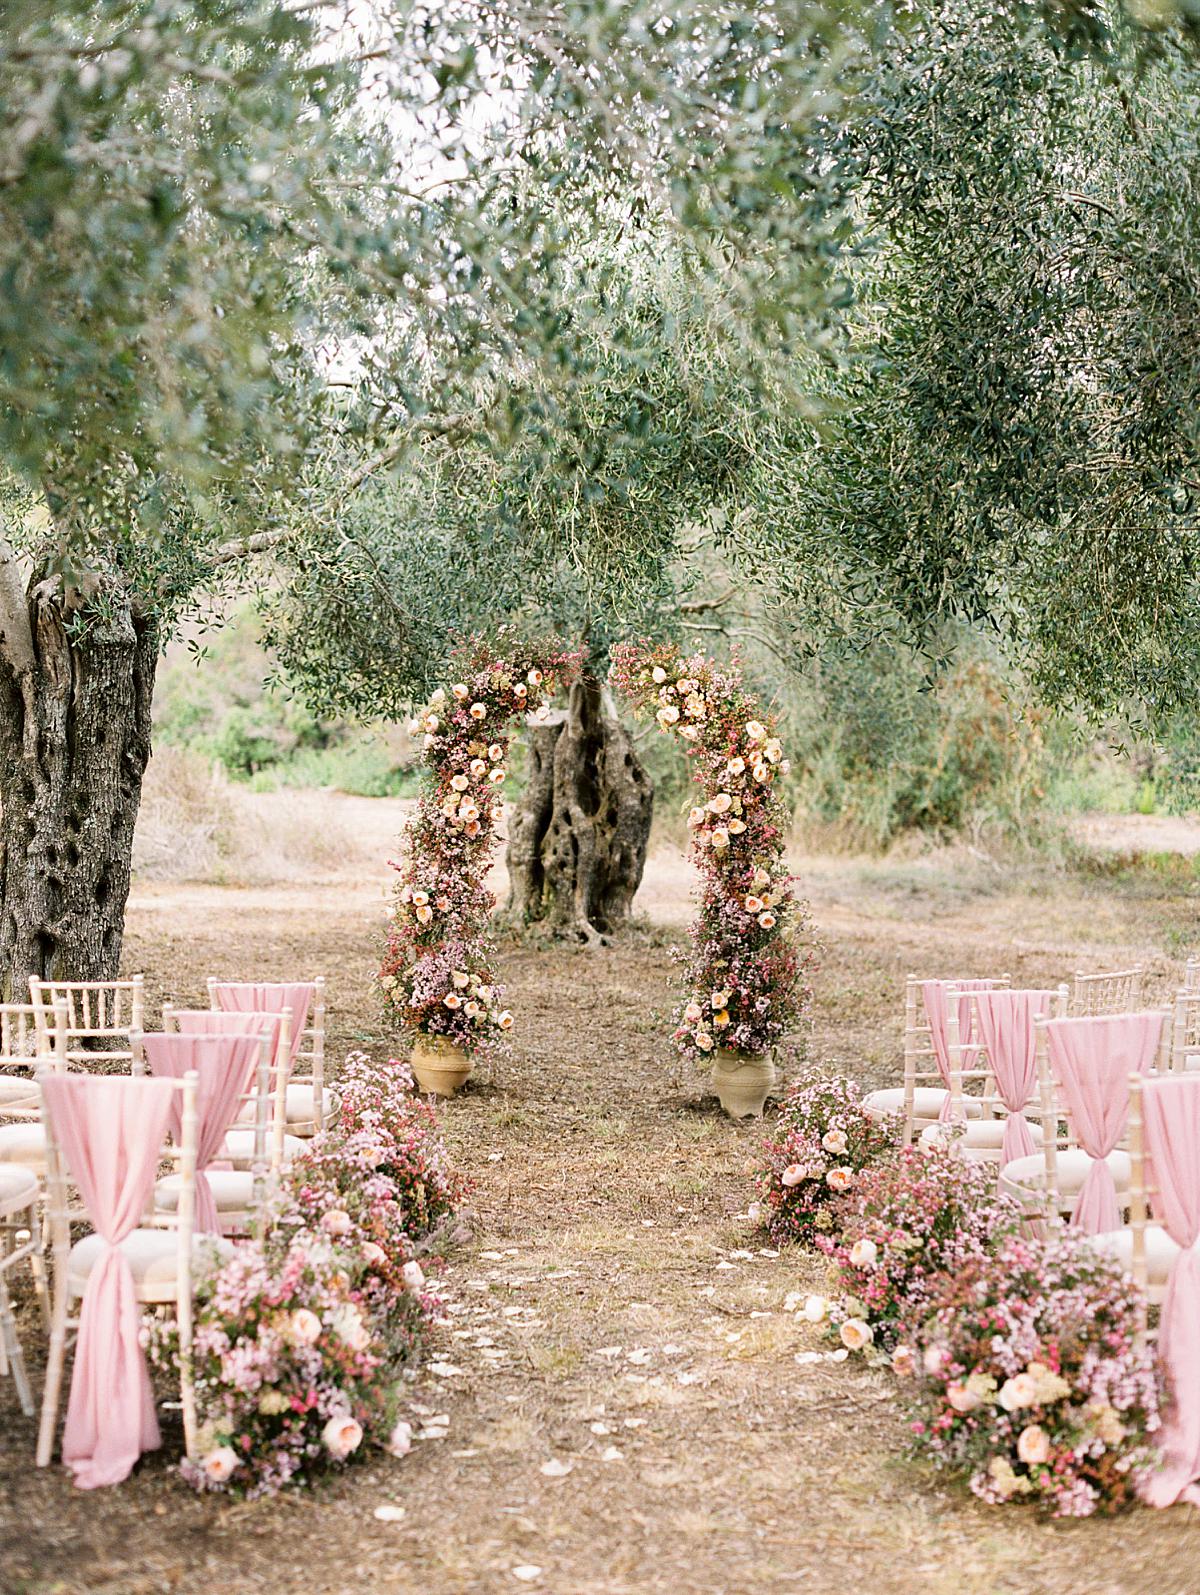 flowers installation at wedding in Corfu by rosmarine weddings